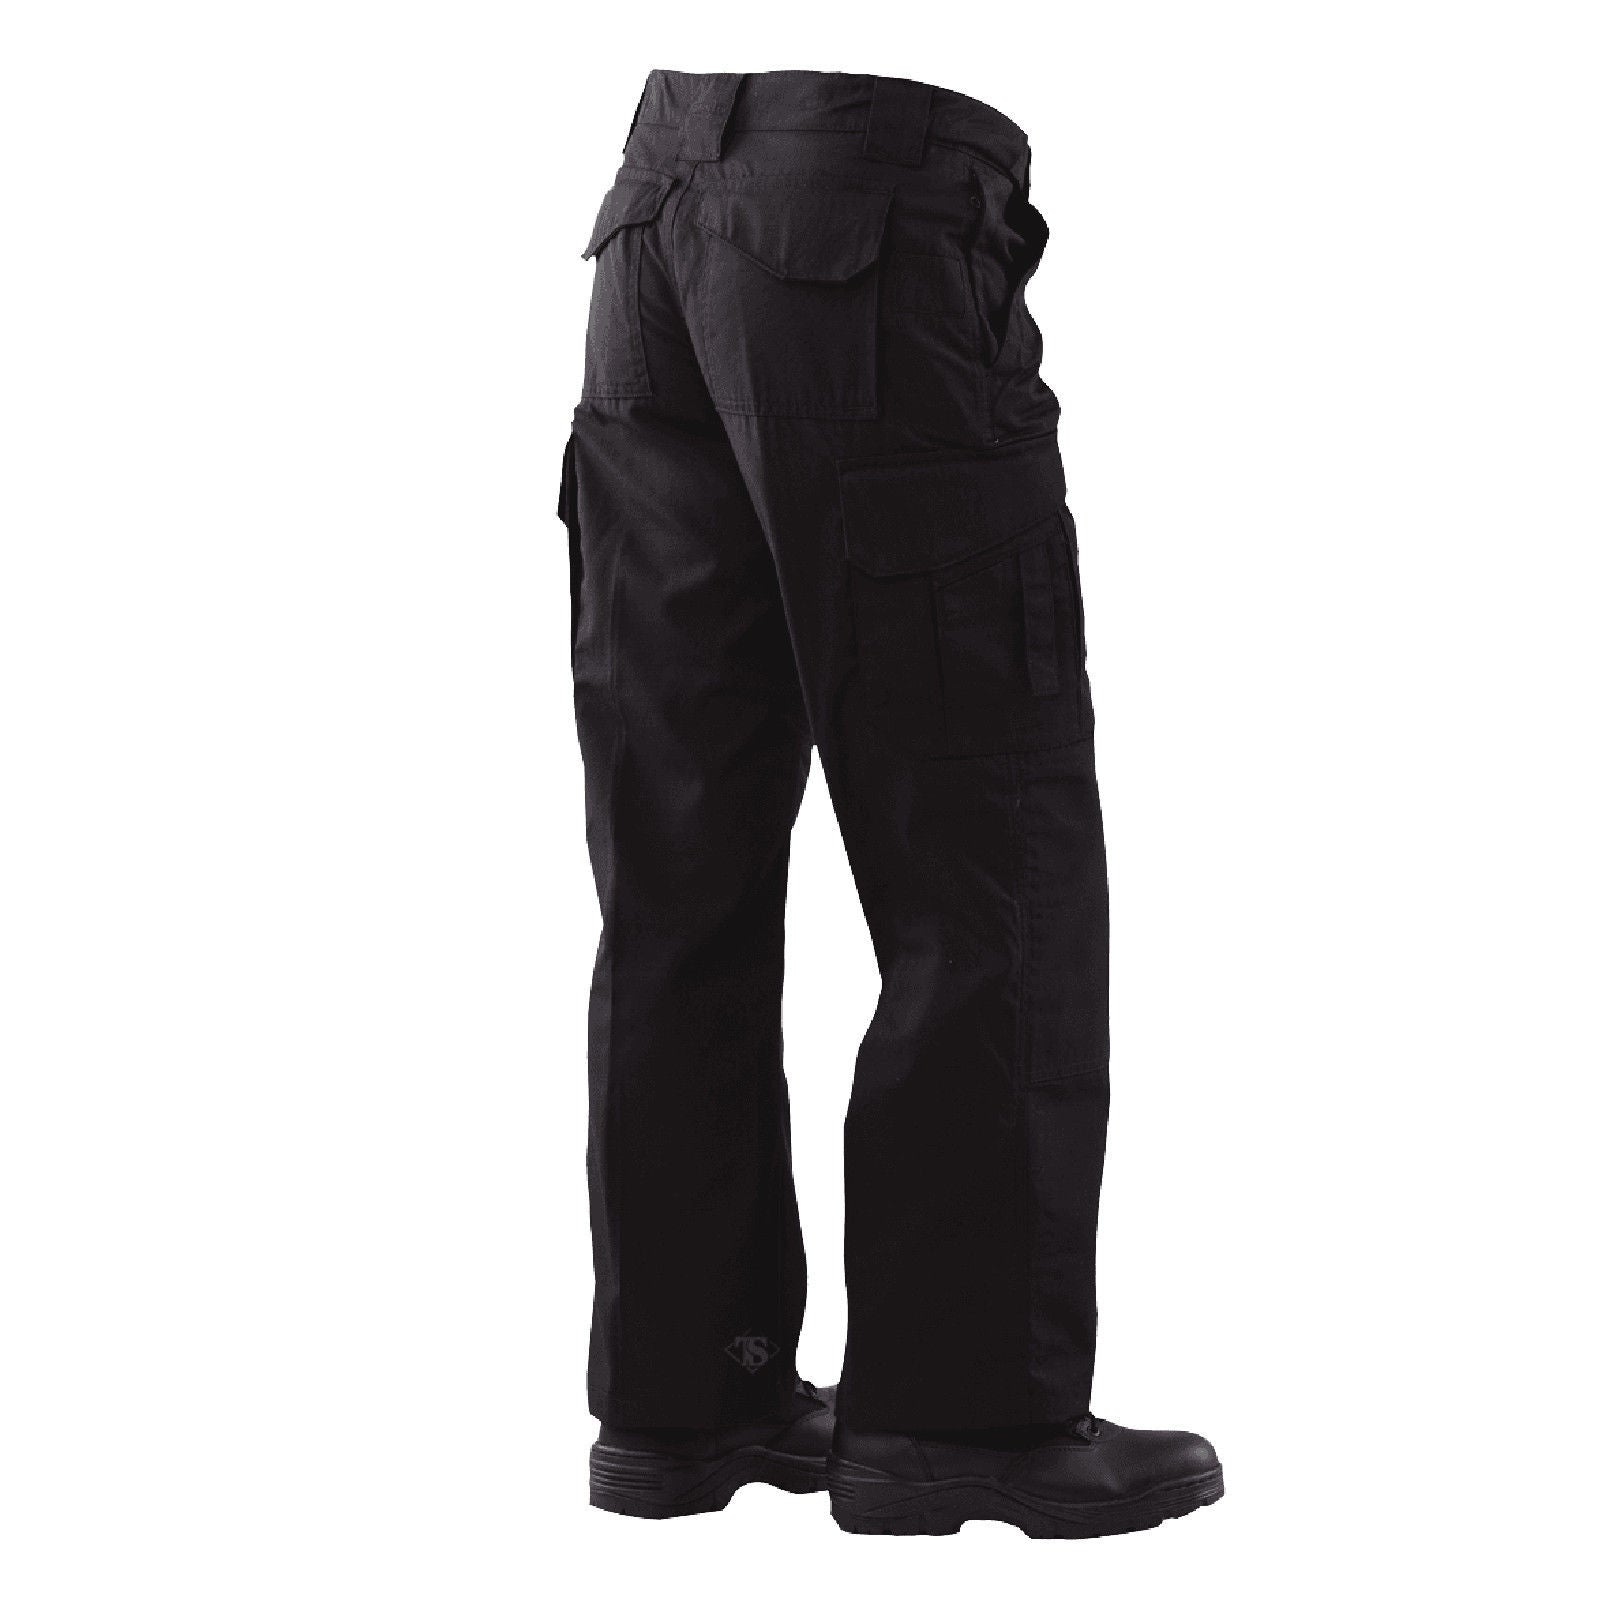 Tru-Spec 24-7 Series Women's EMS Pants - Black or Navy Paramedic